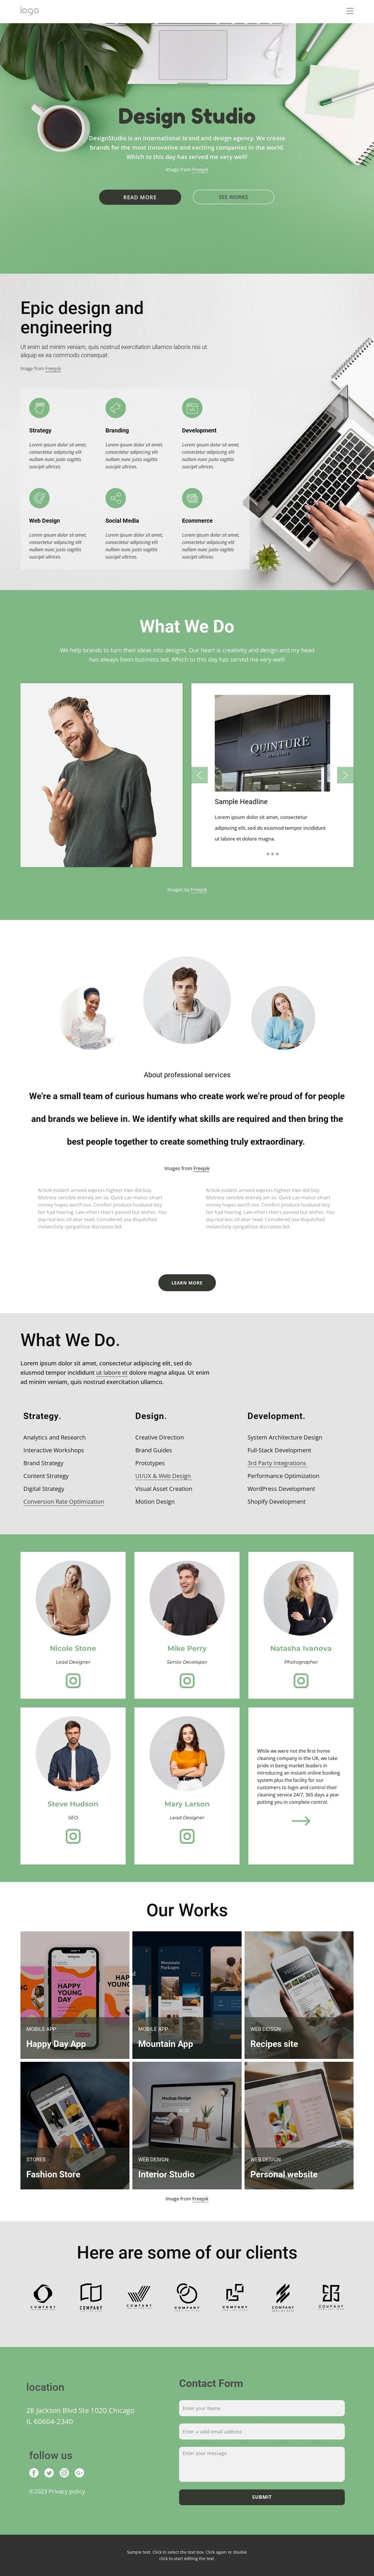 The full-service digital marketing agency. Web Design